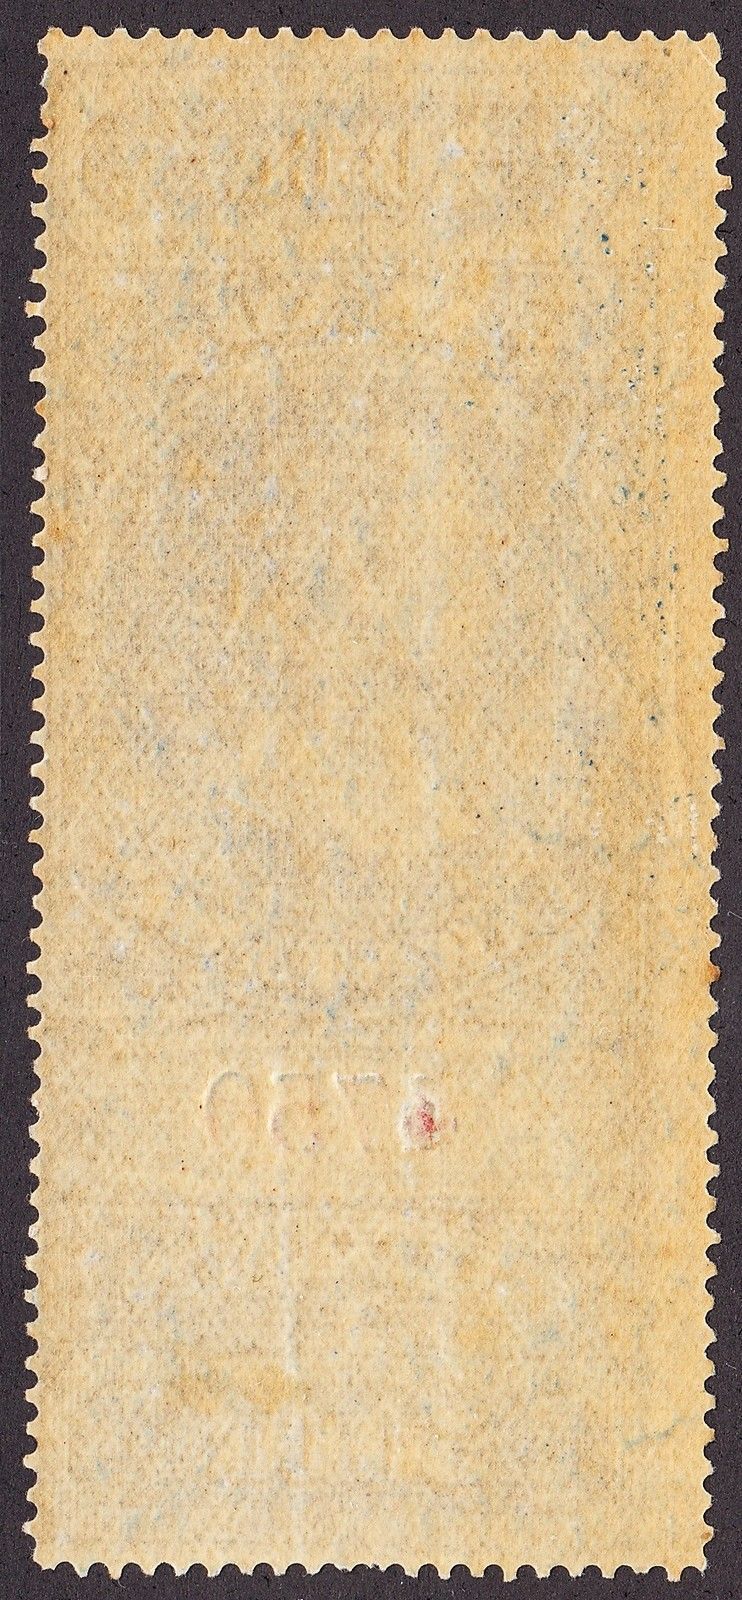 0004SC1708 - FSC4 - Mint - Deveney Stamps Ltd. Canadian Stamps